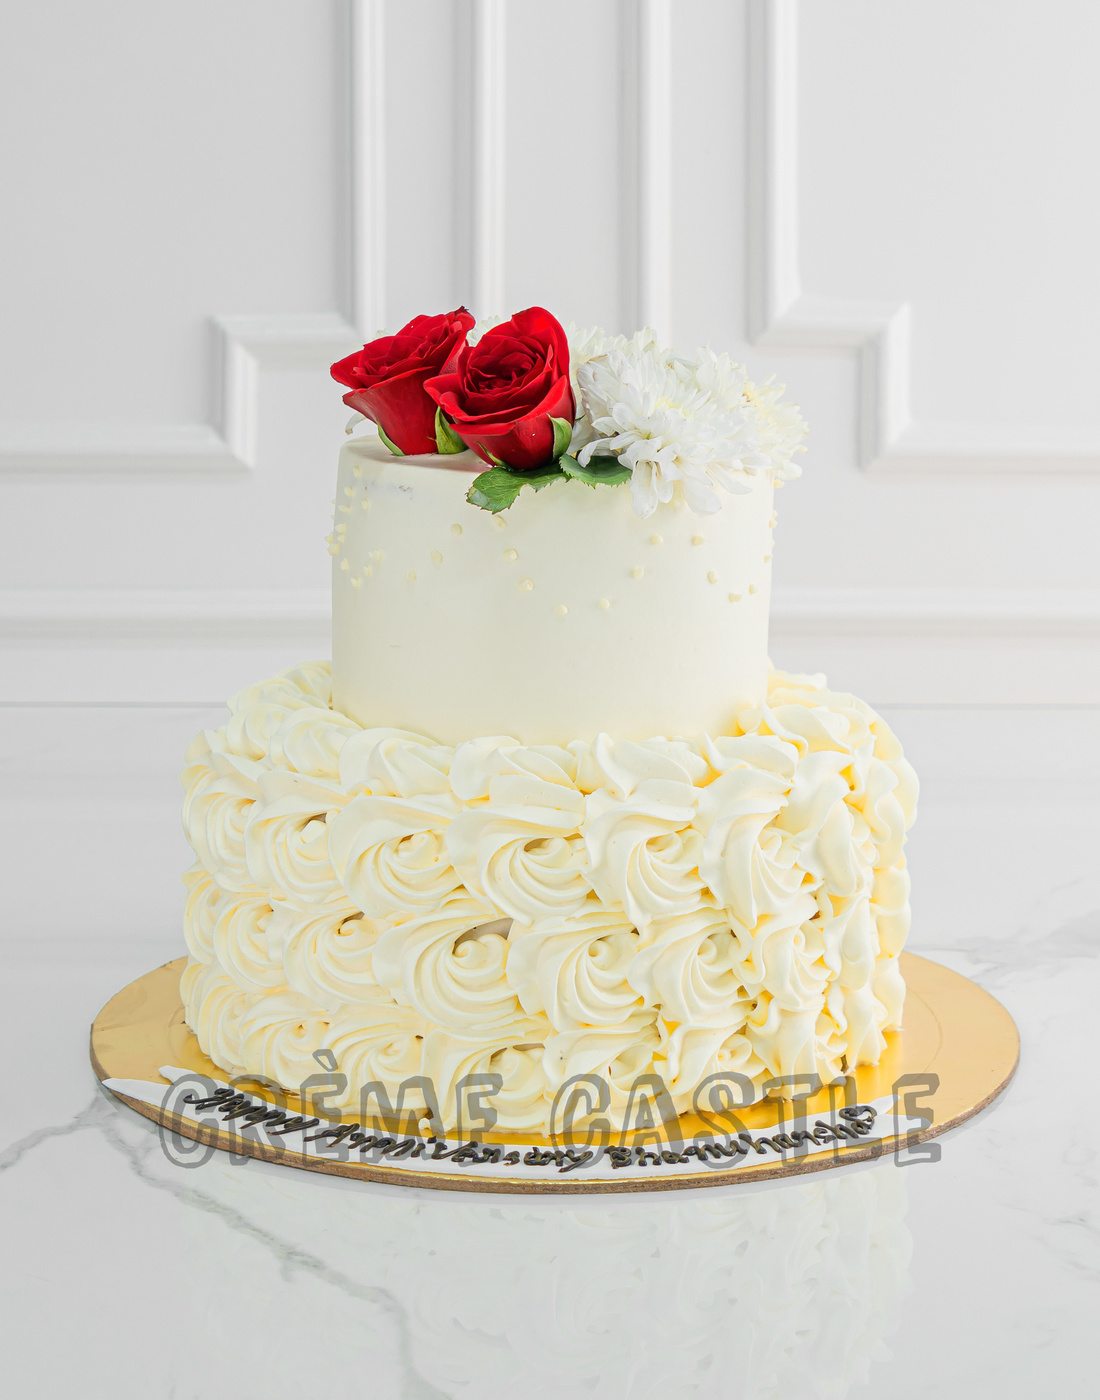 Red & White Flower Wedding Cake | Wedding cakes with flowers, White wedding  cakes, Beautiful cakes